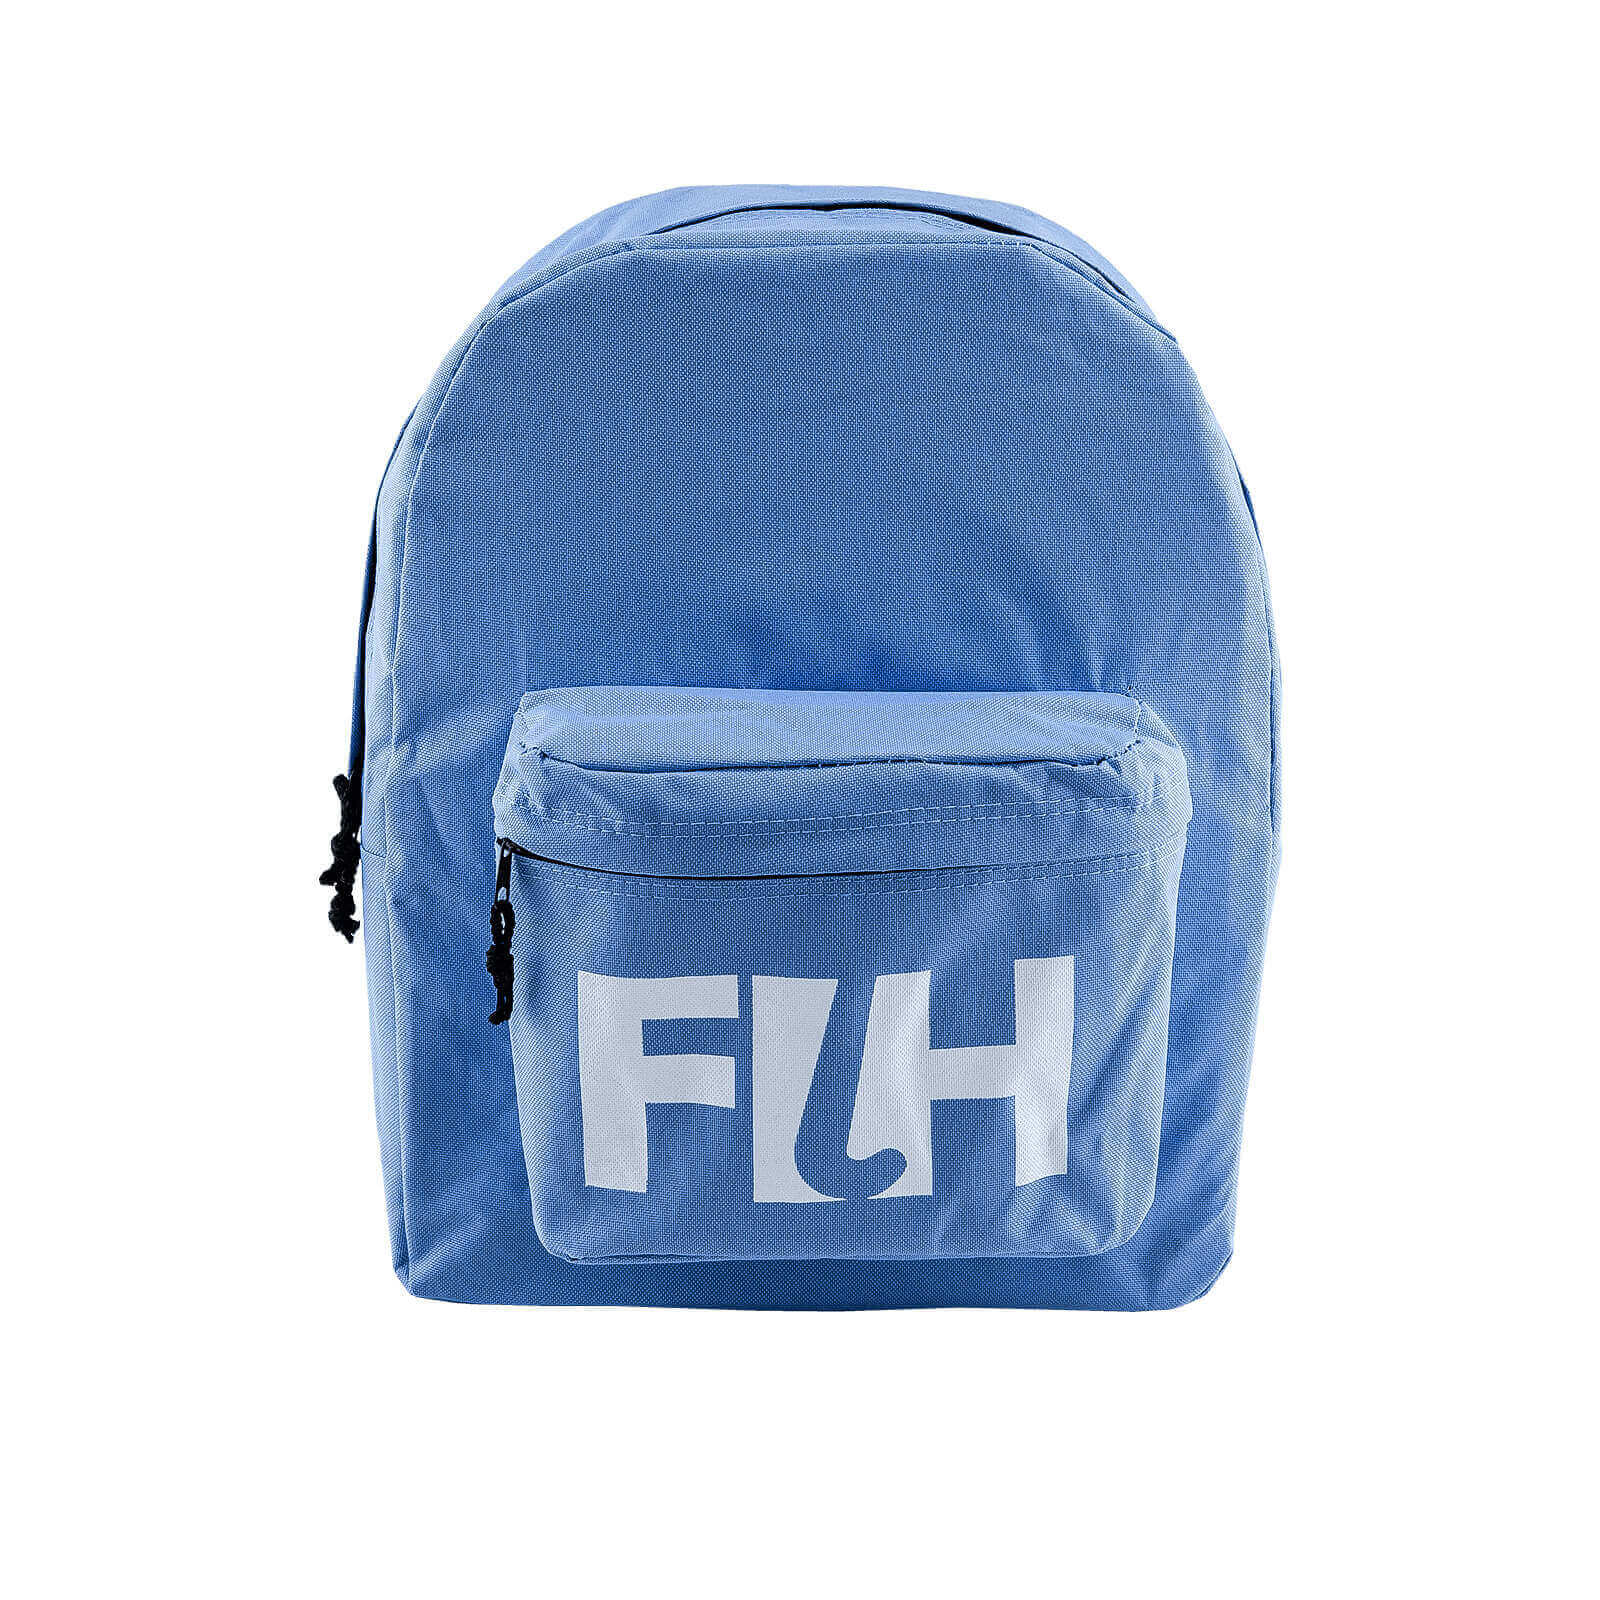 Backpack, Blue - FIH Classic